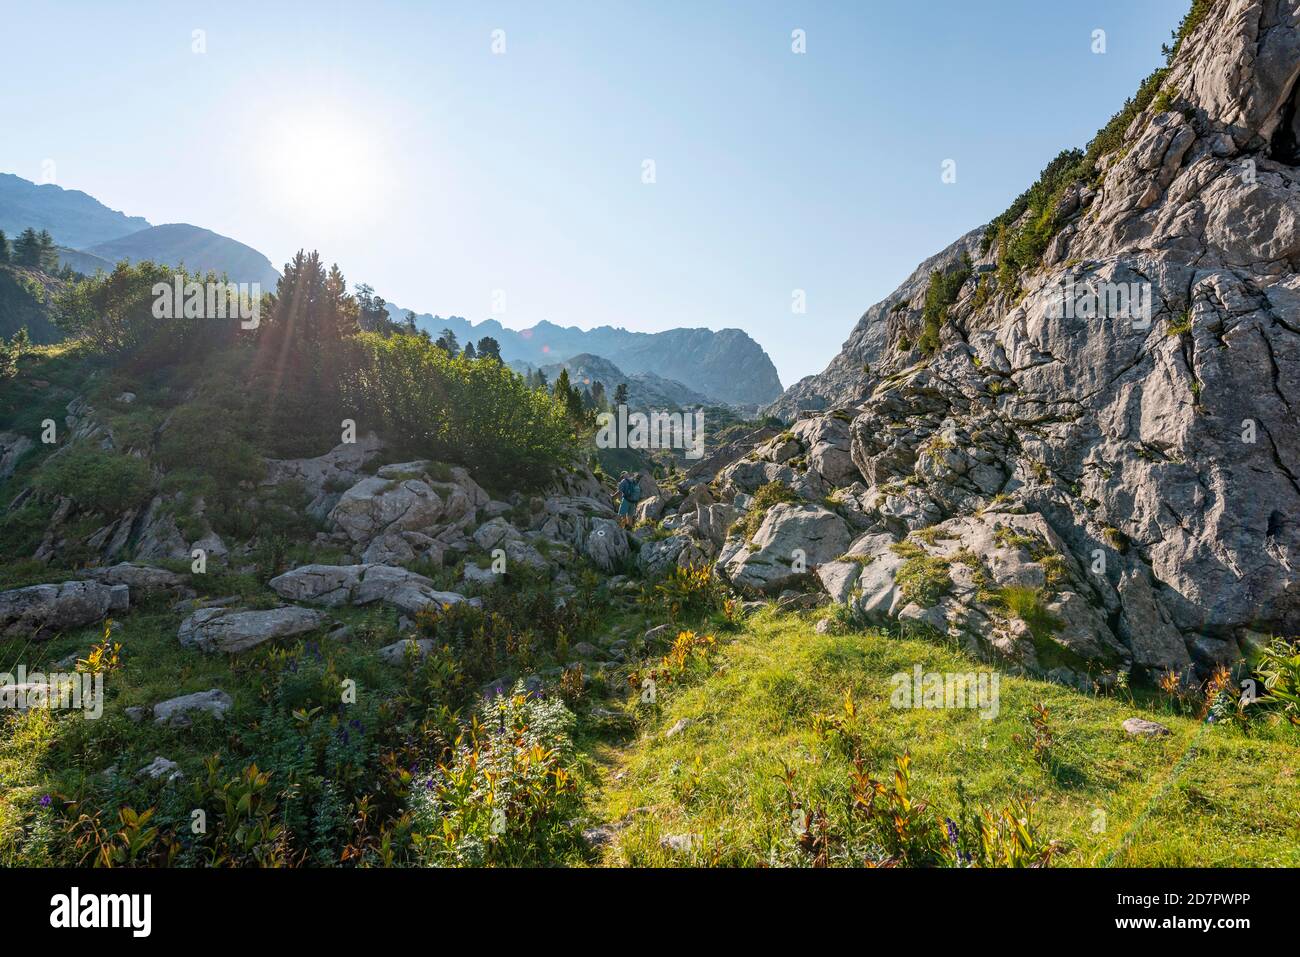 Hiker, mountain landscape, Stuhlgraben, Griesskogel in the back, Steinernes Meer, Funtenseetauern, Berchtesgaden National Park, Berchtesgadener Land Stock Photo